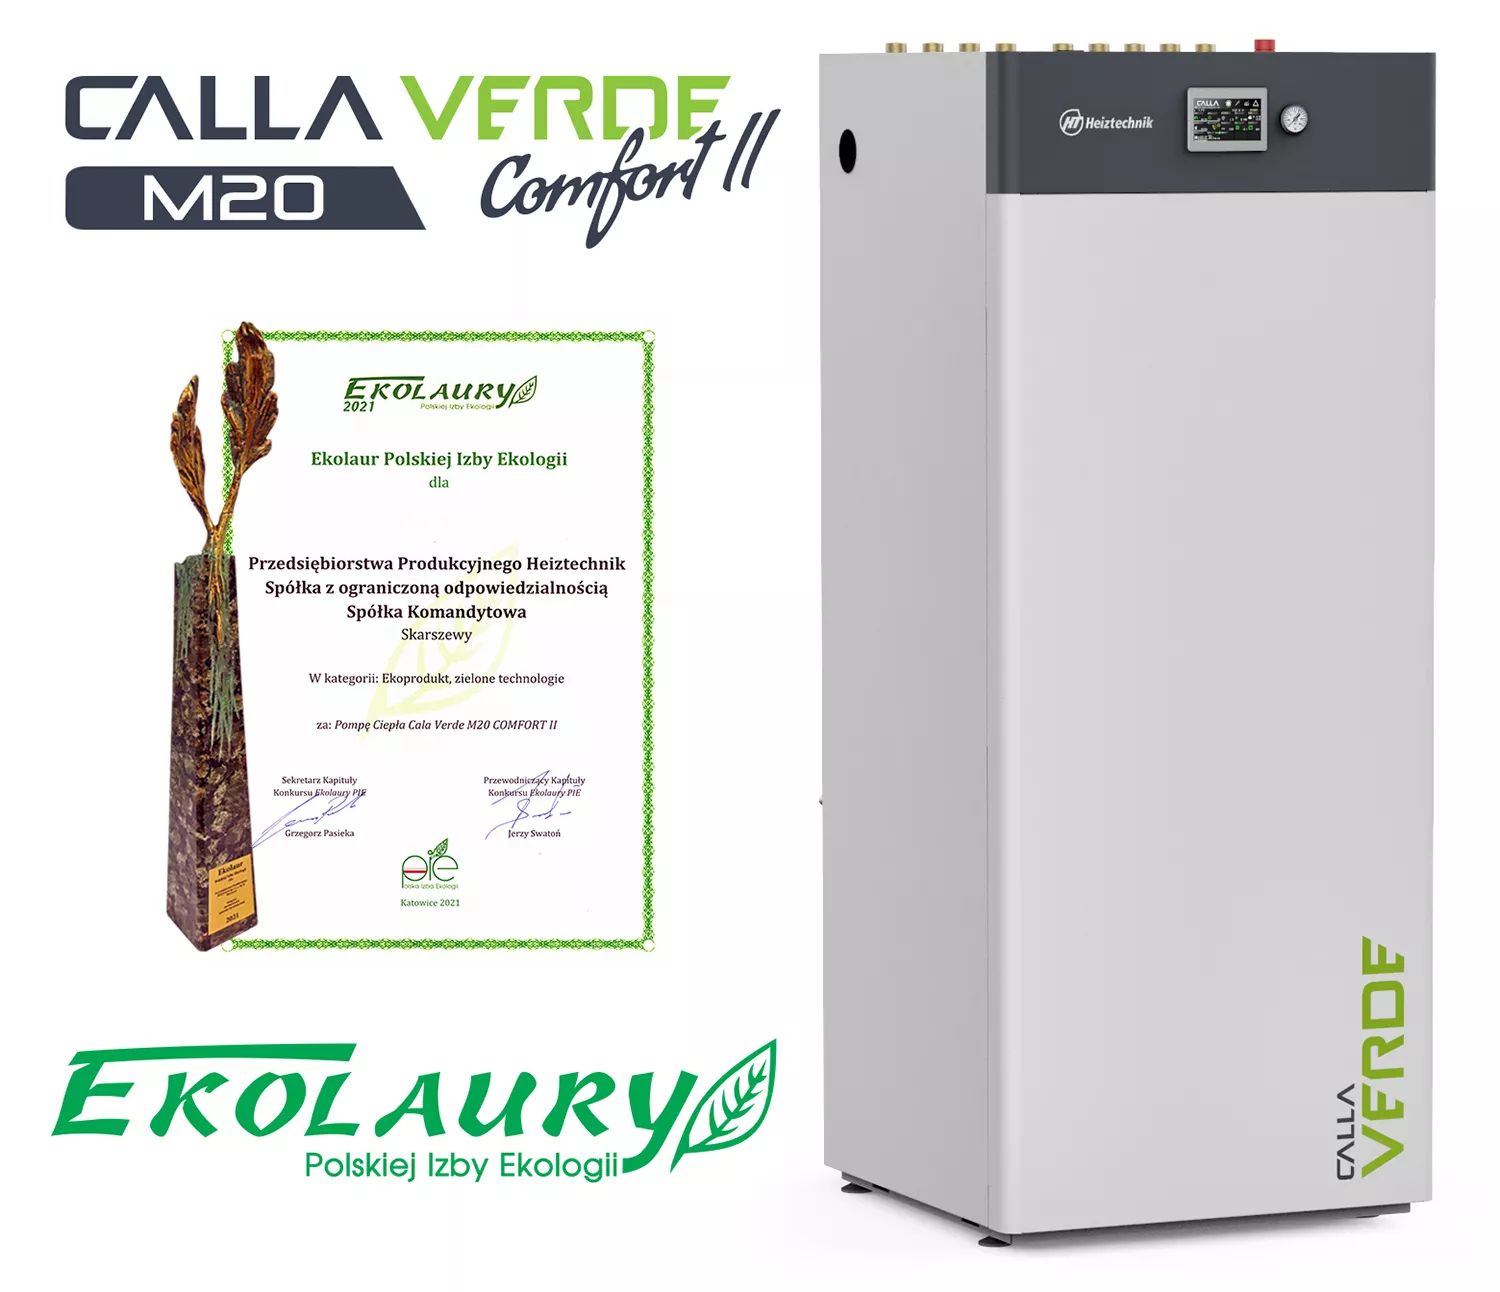 Pompa ciepła PC Calla Verde M20 Comfort II - PRODUKT POLSKI